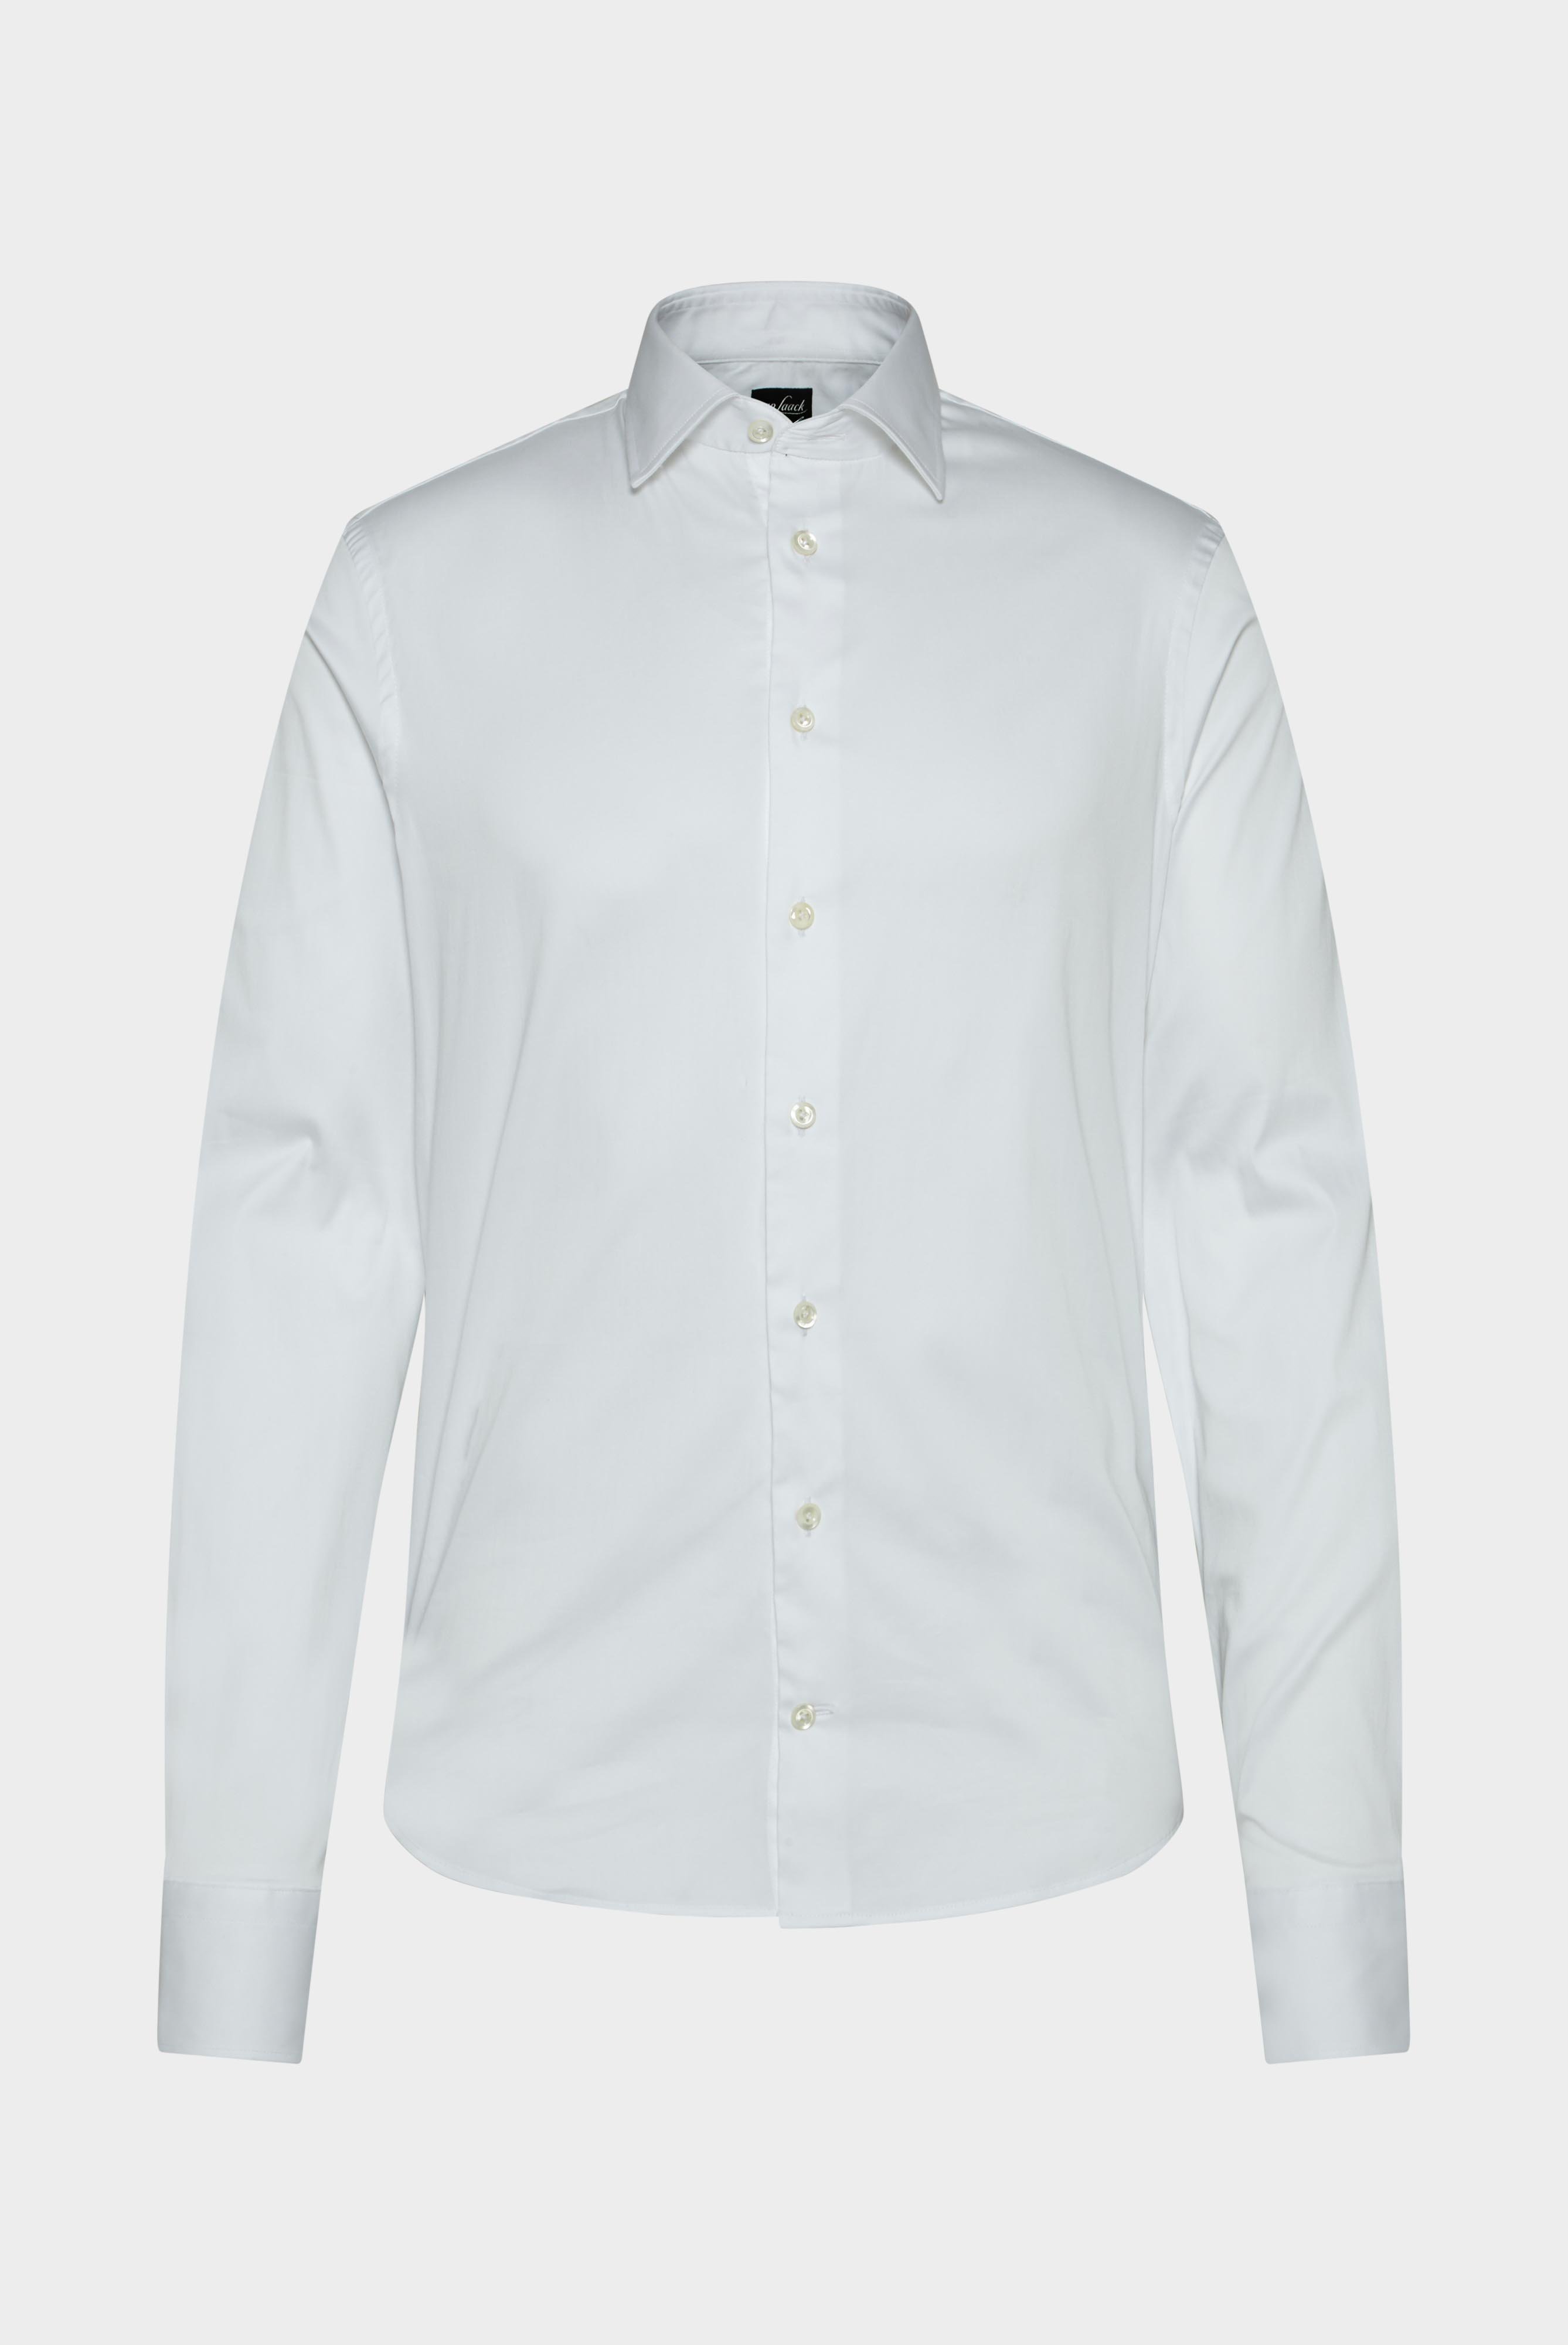 Business Shirts+Cotton Stretch Poplin Shirt+20.2010.NV.130830.000.37